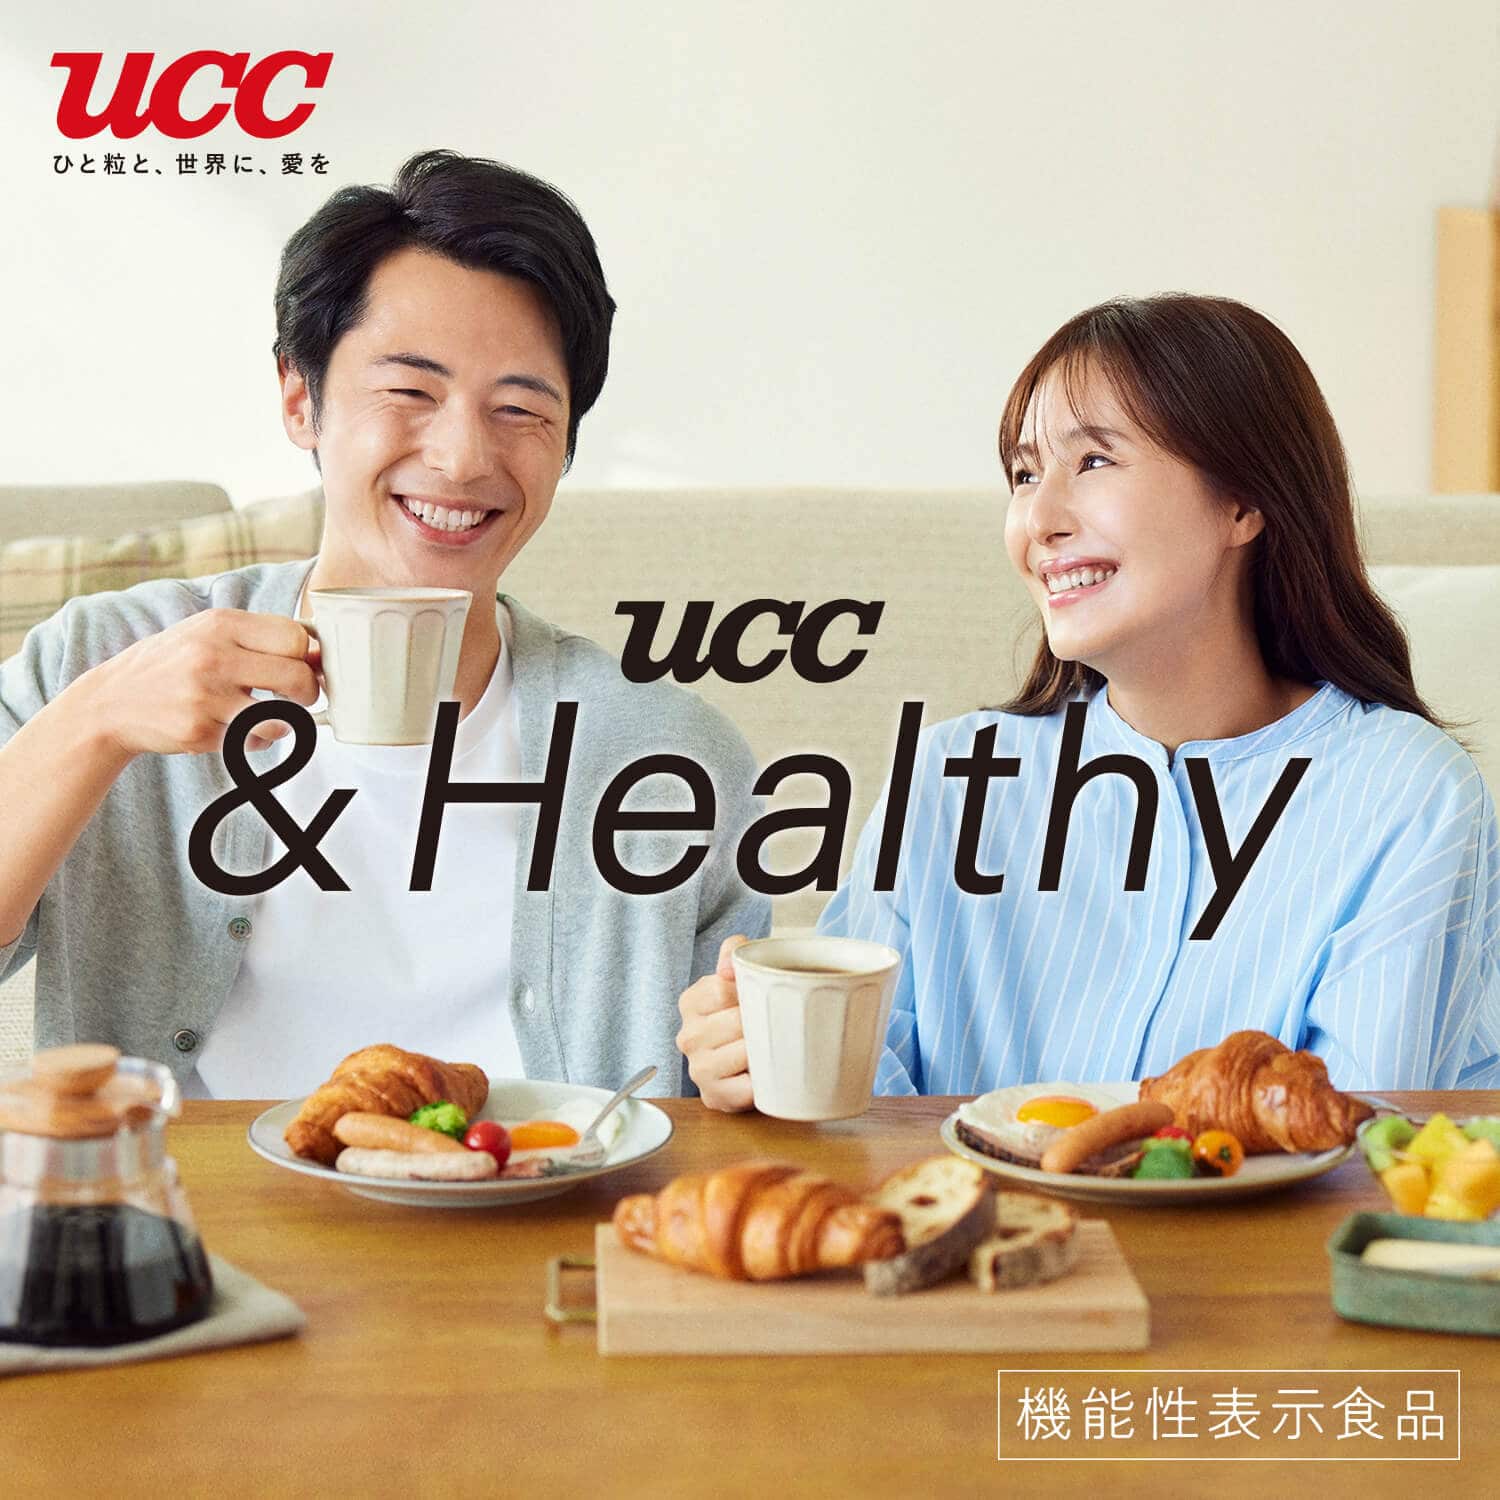 UCC &Healthy BLACK PET270ml